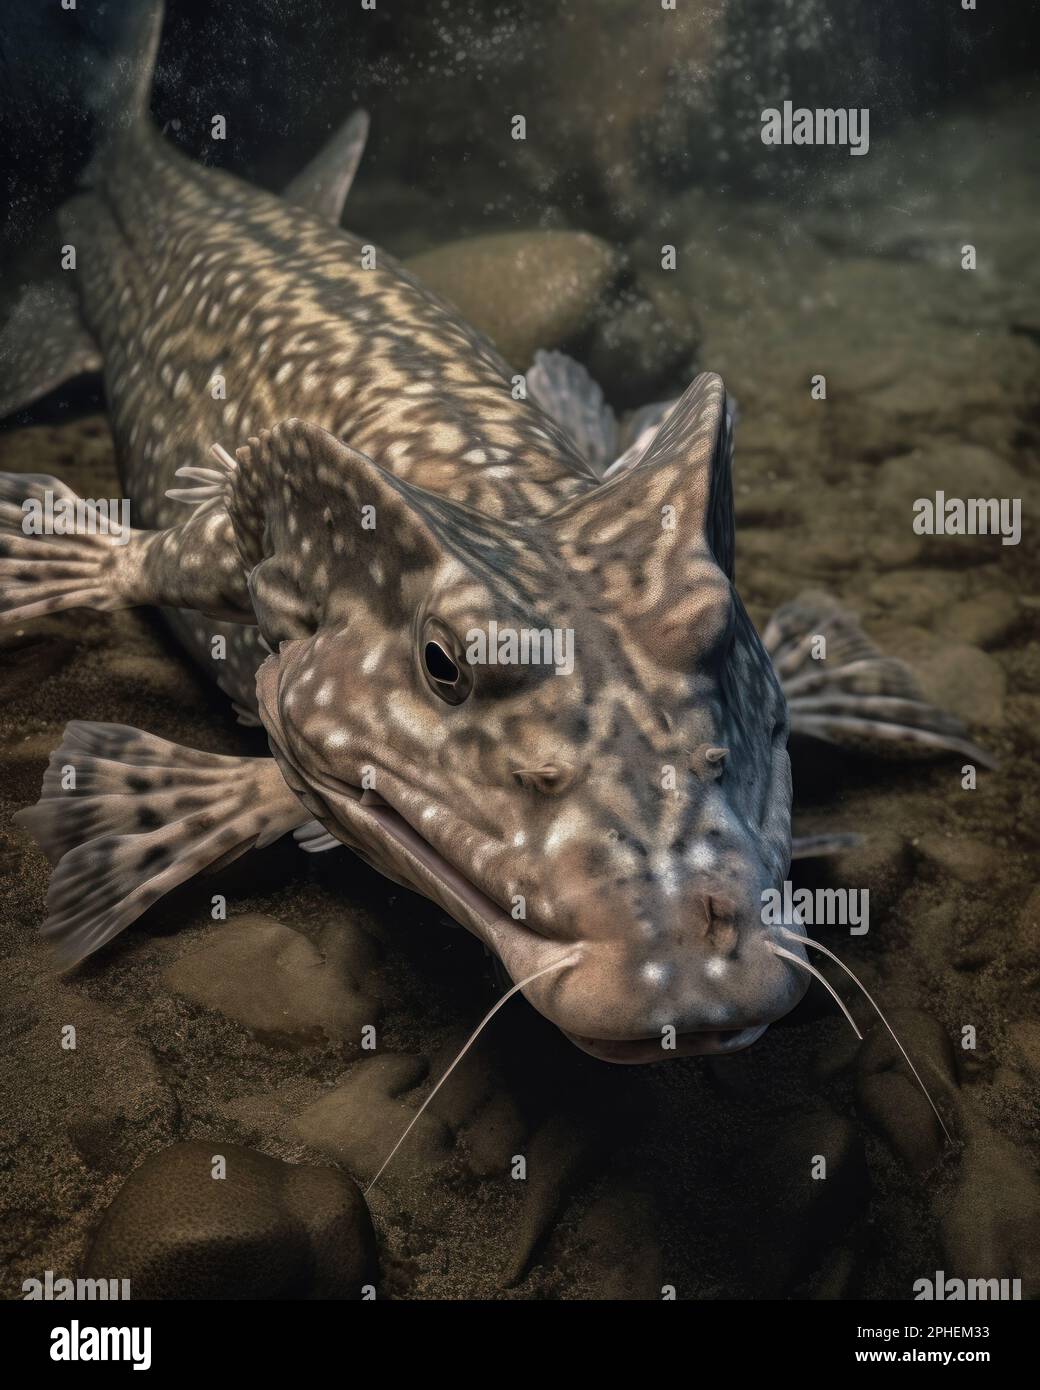 https://c8.alamy.com/comp/2PHEM33/enigmatic-goonch-catfish-lurking-in-the-himalayan-river-depths-2PHEM33.jpg